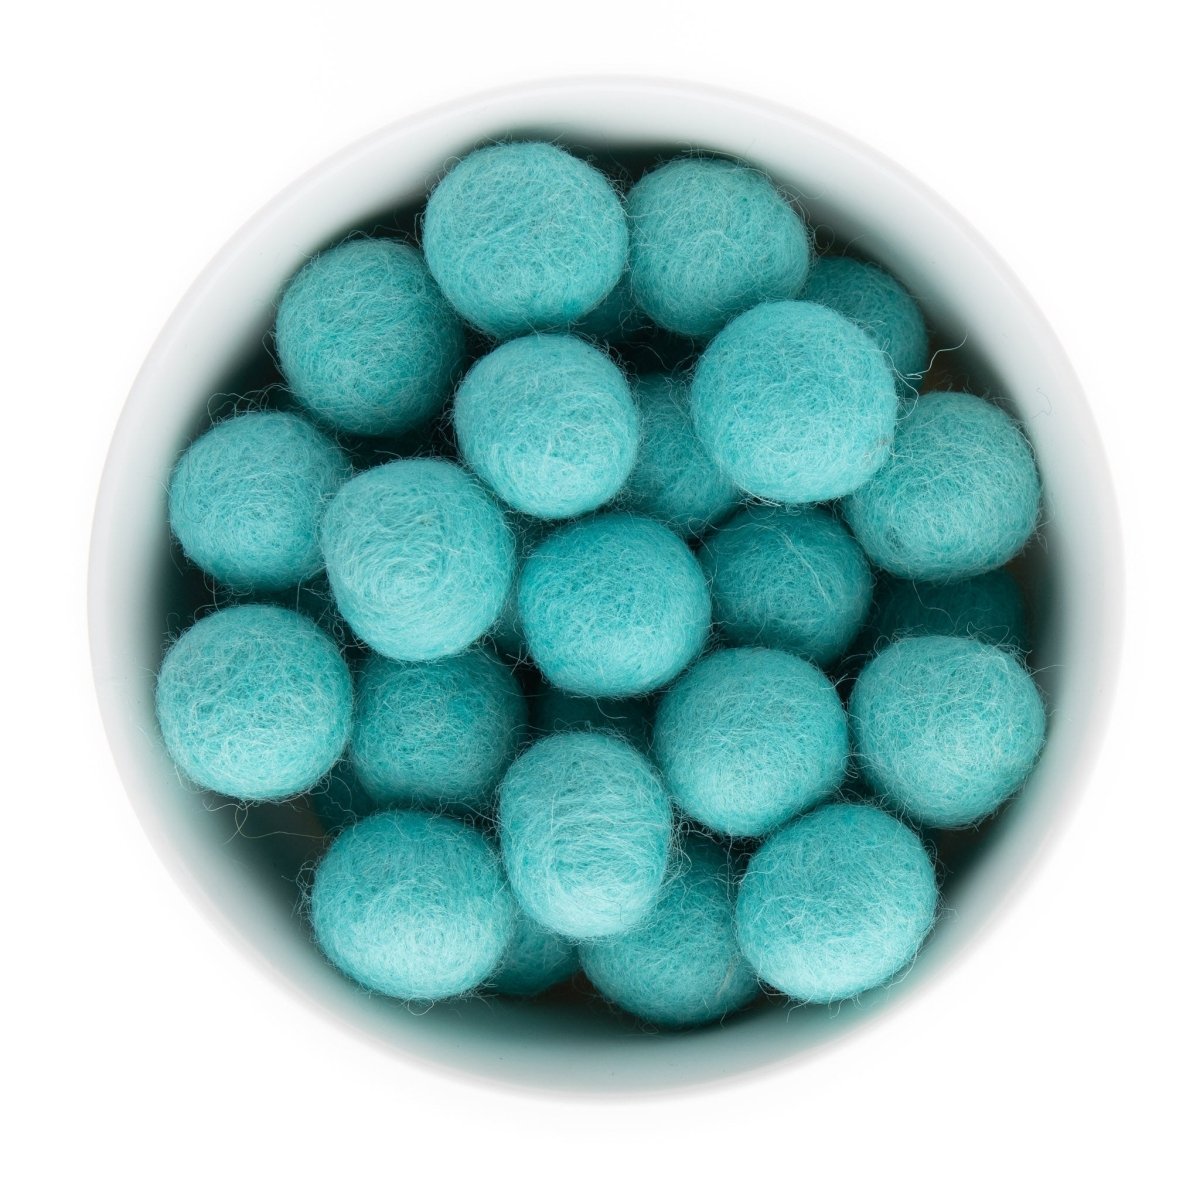 Felt & Crochet Beads Felt Balls 22mm Sea Blue from Cara & Co Craft Supply